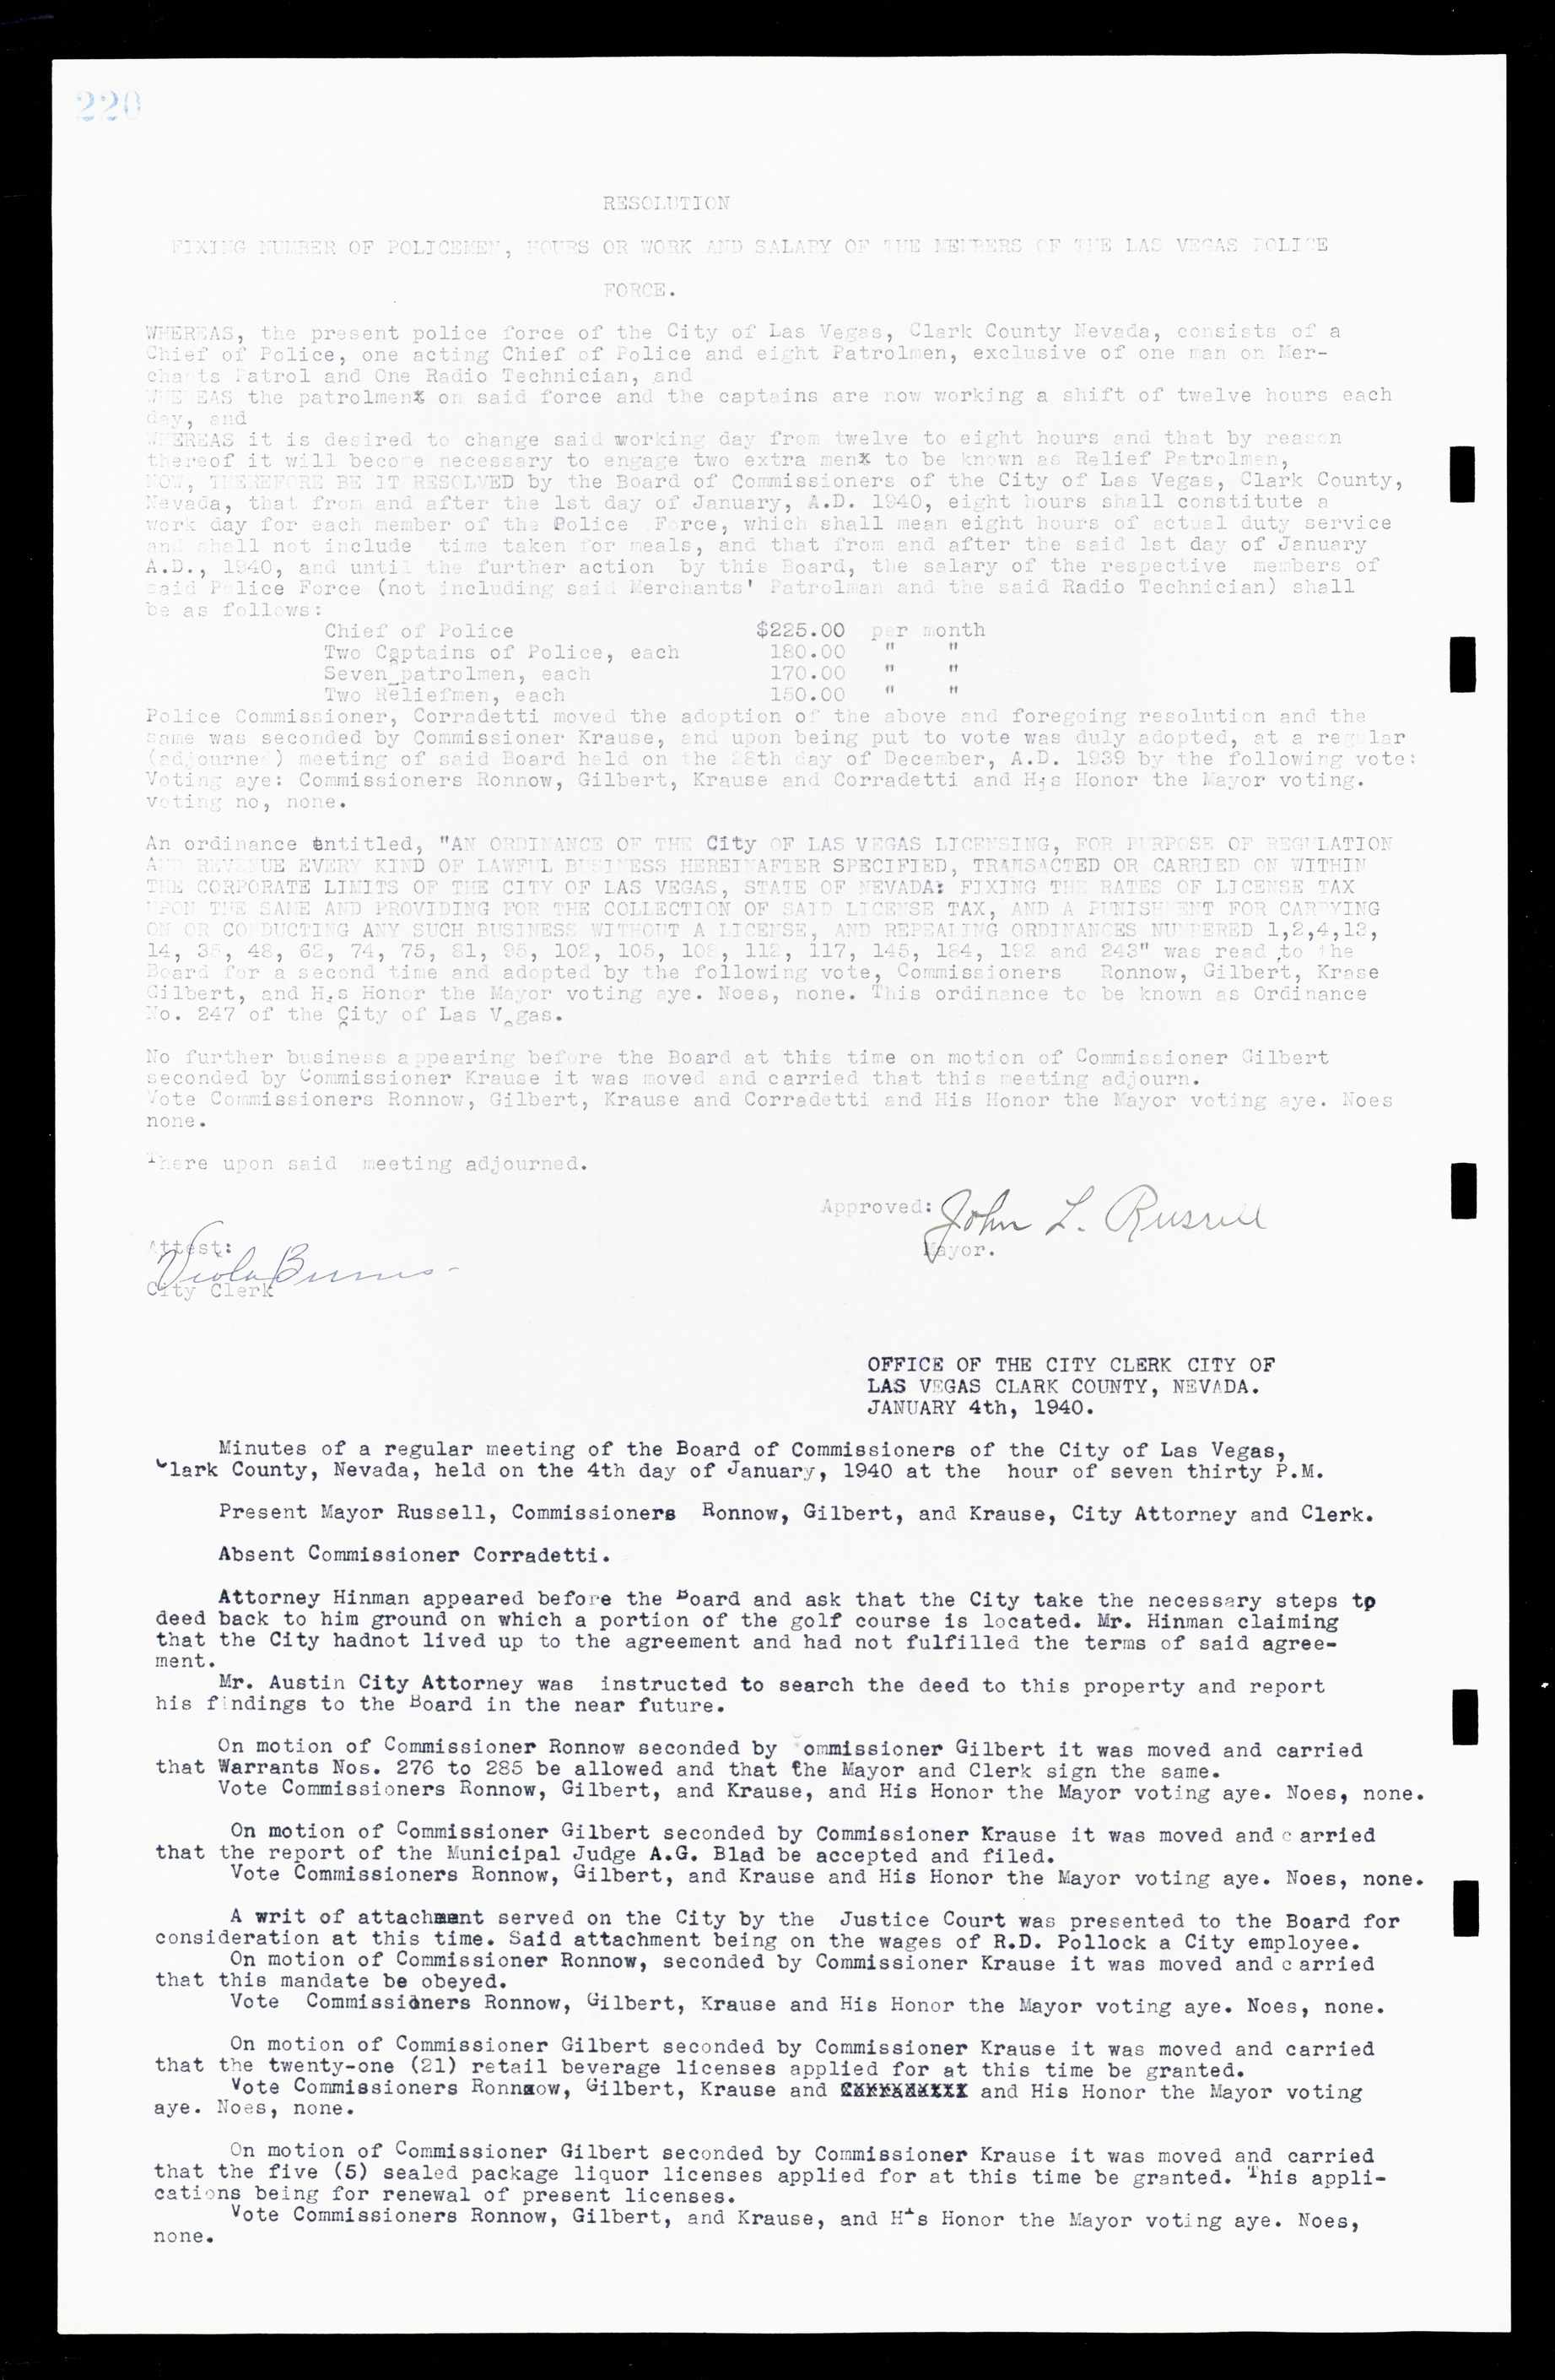 Las Vegas City Commission Minutes, February 17, 1937 to August 4, 1942, lvc000004-238